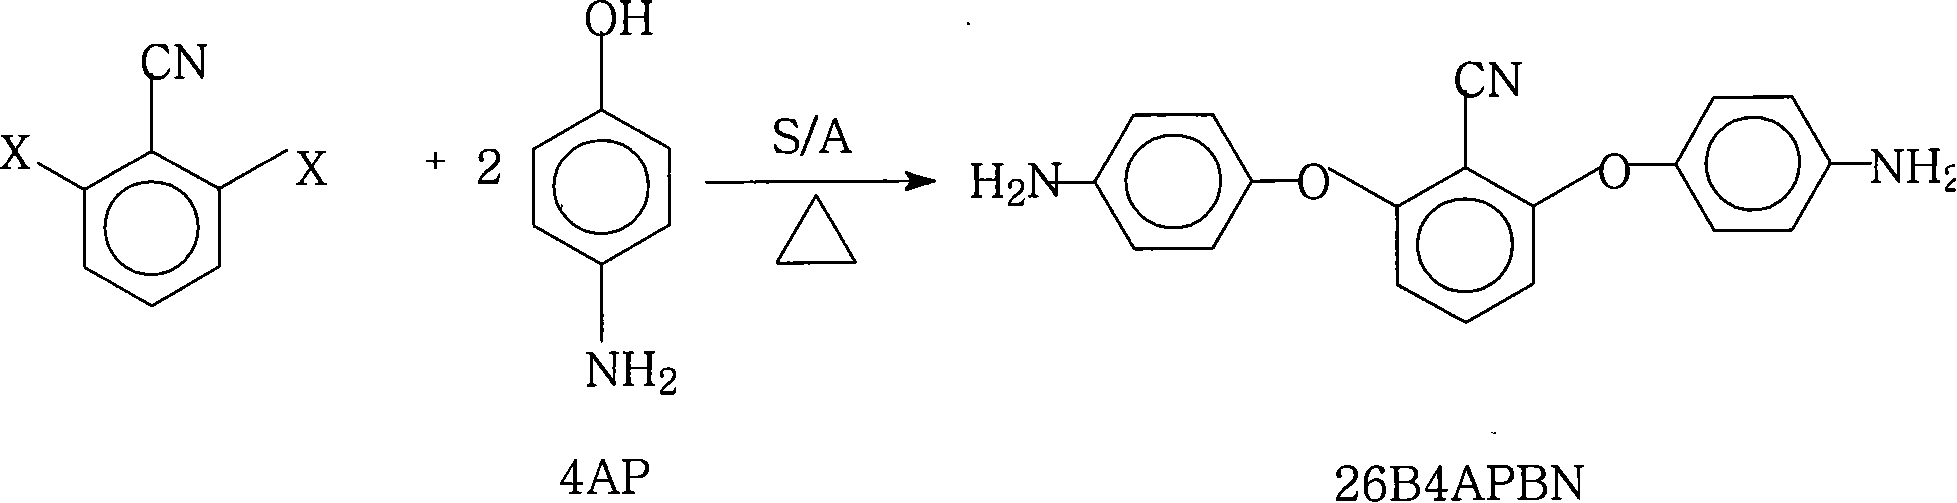 Method for preparing 2,6-di(4-amino-benzene oxygen) cyanobenzene